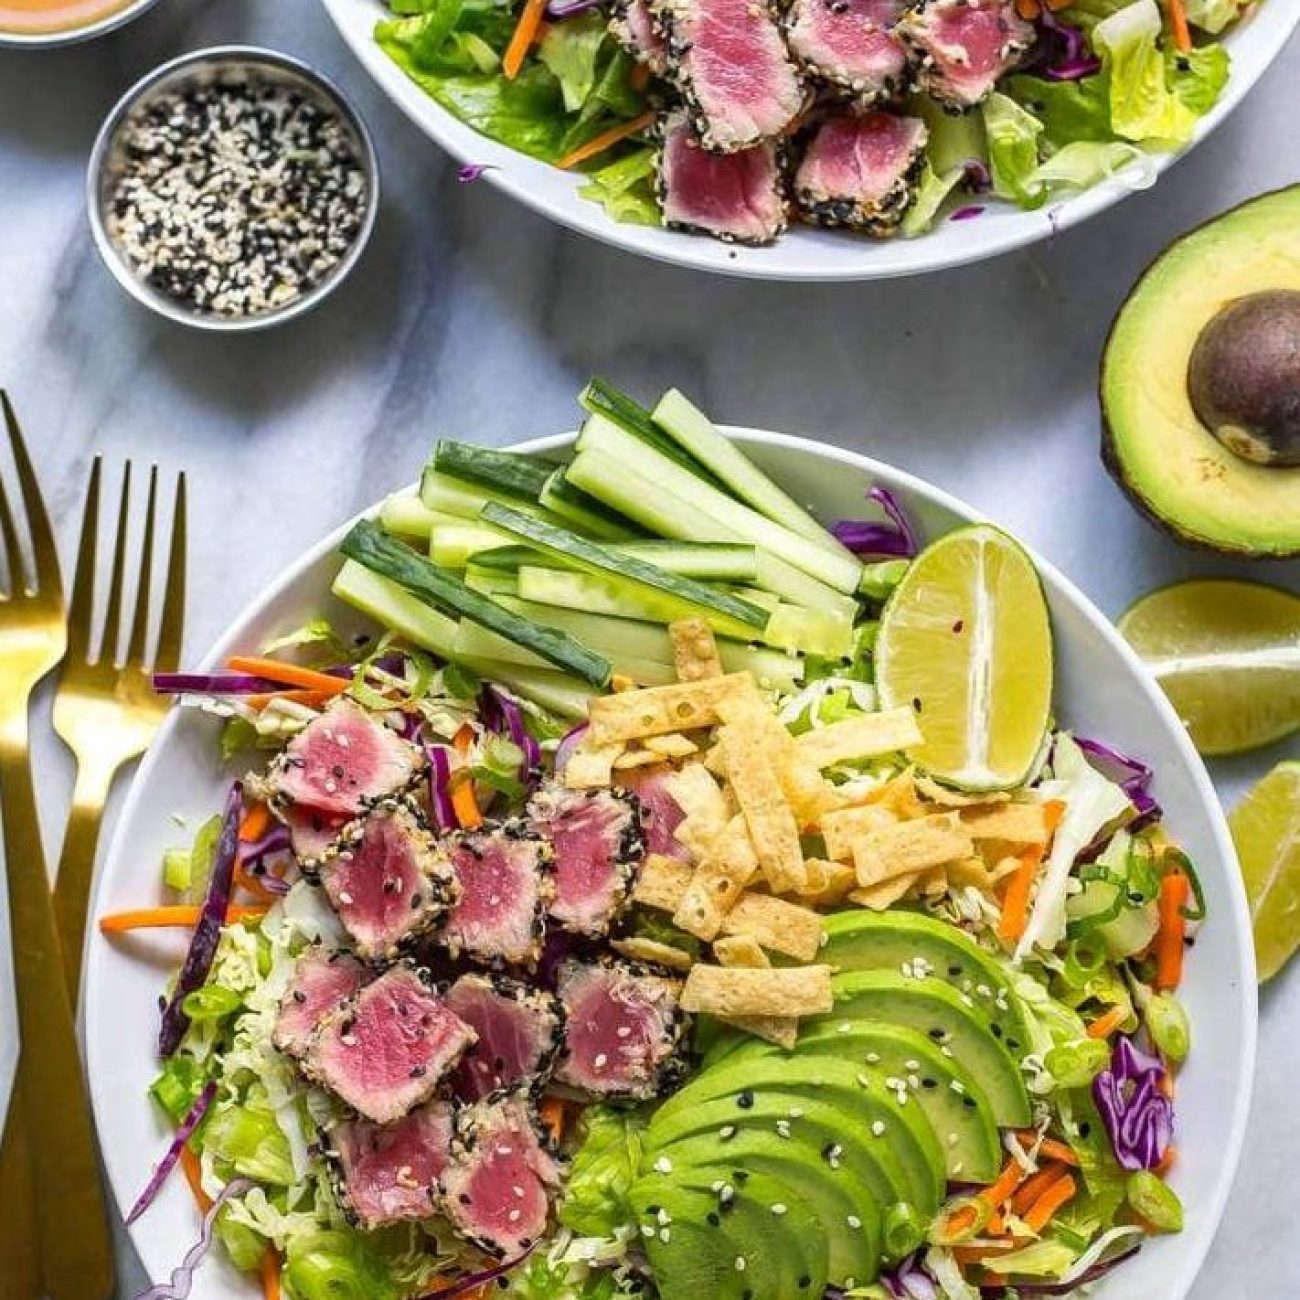 Seared Ahi Tuna And Salad Of Mixed Greens